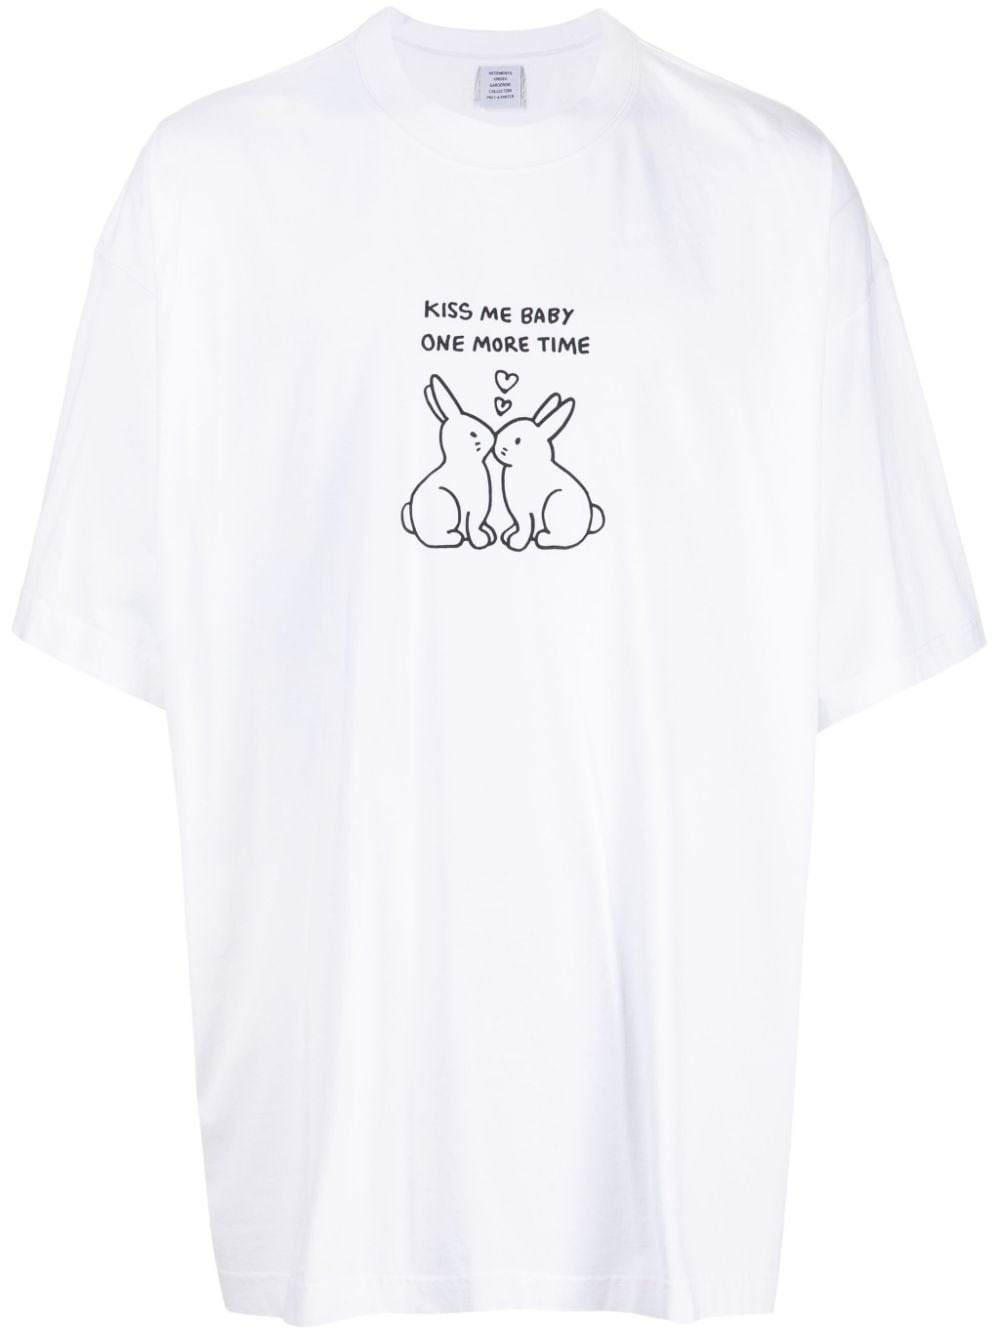 Kissing Bunnies round-neck T-Shirt - 1